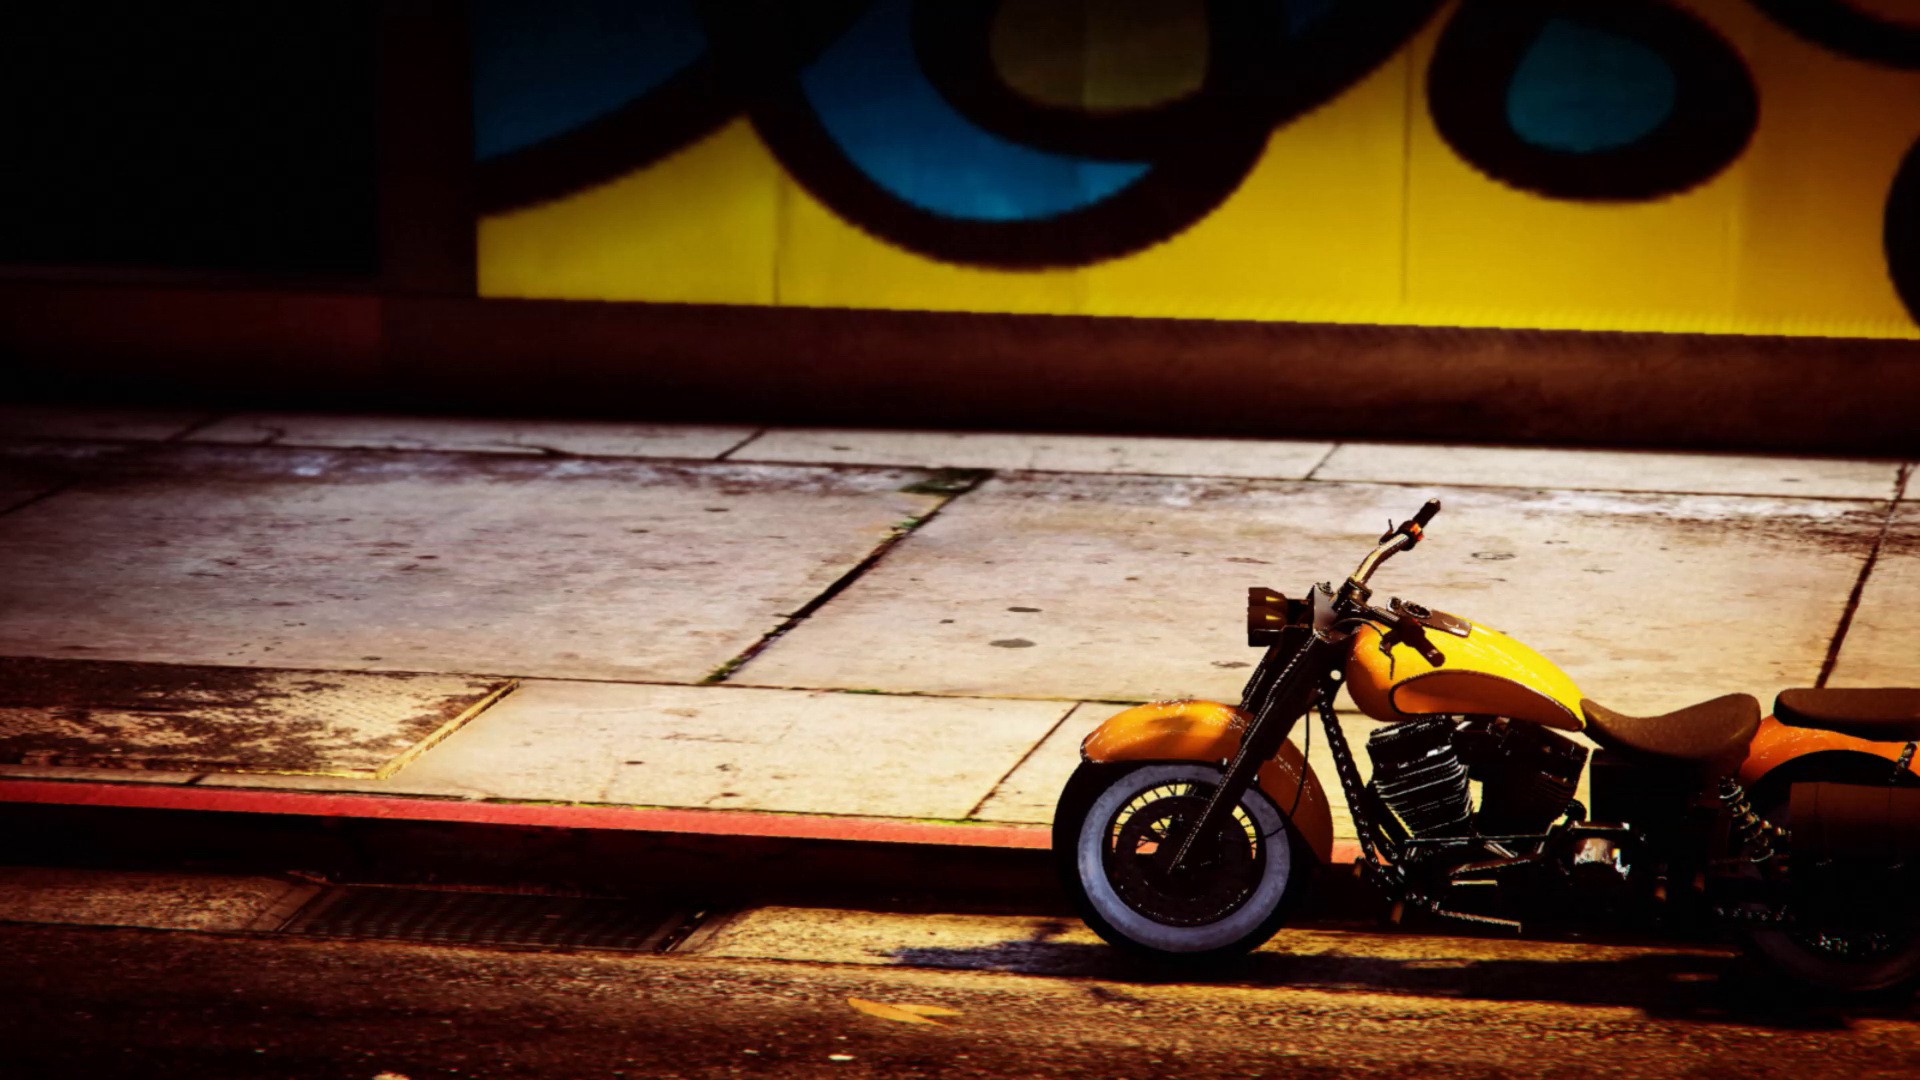 Grand Theft Auto V Grand Theft Auto Online Rockstar Games Motorcycle Chopper Graffiti Street 1920x1080